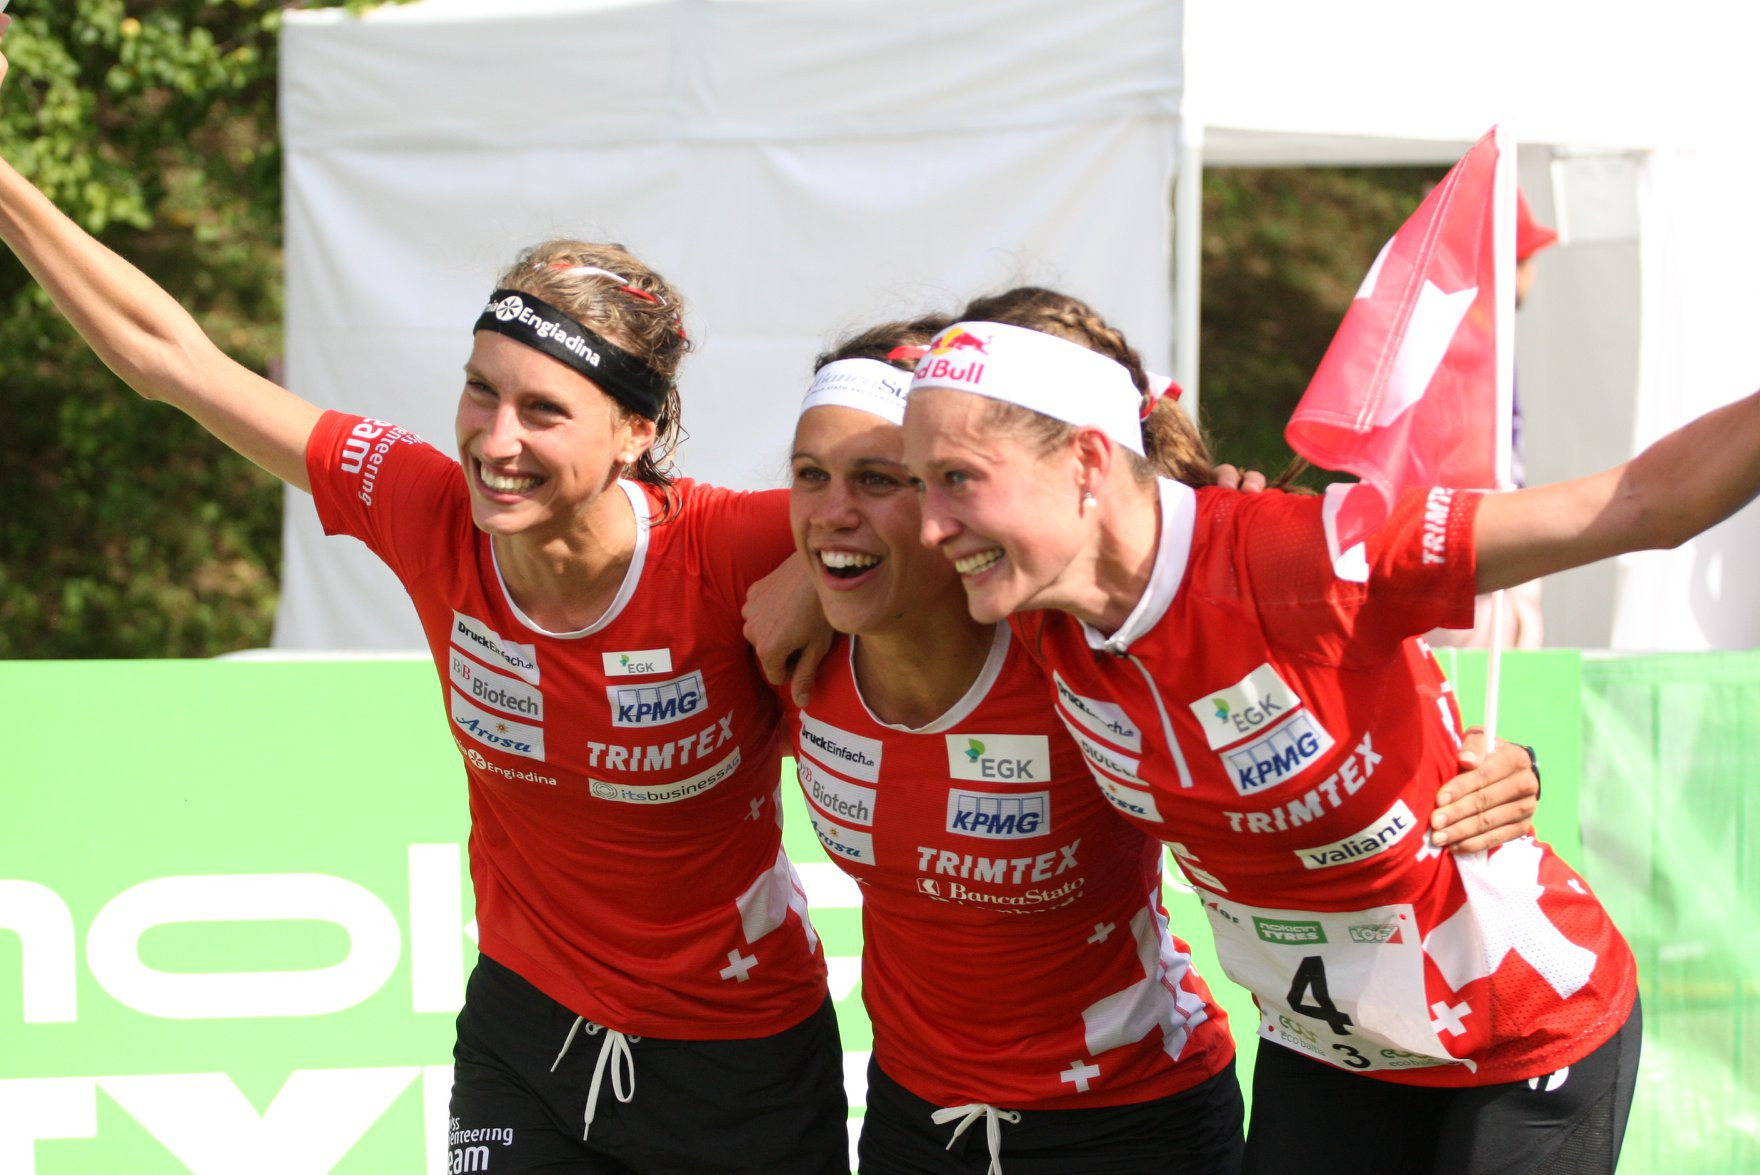 Switzerland and Norway enjoy relay wins at World Orienteering Championships